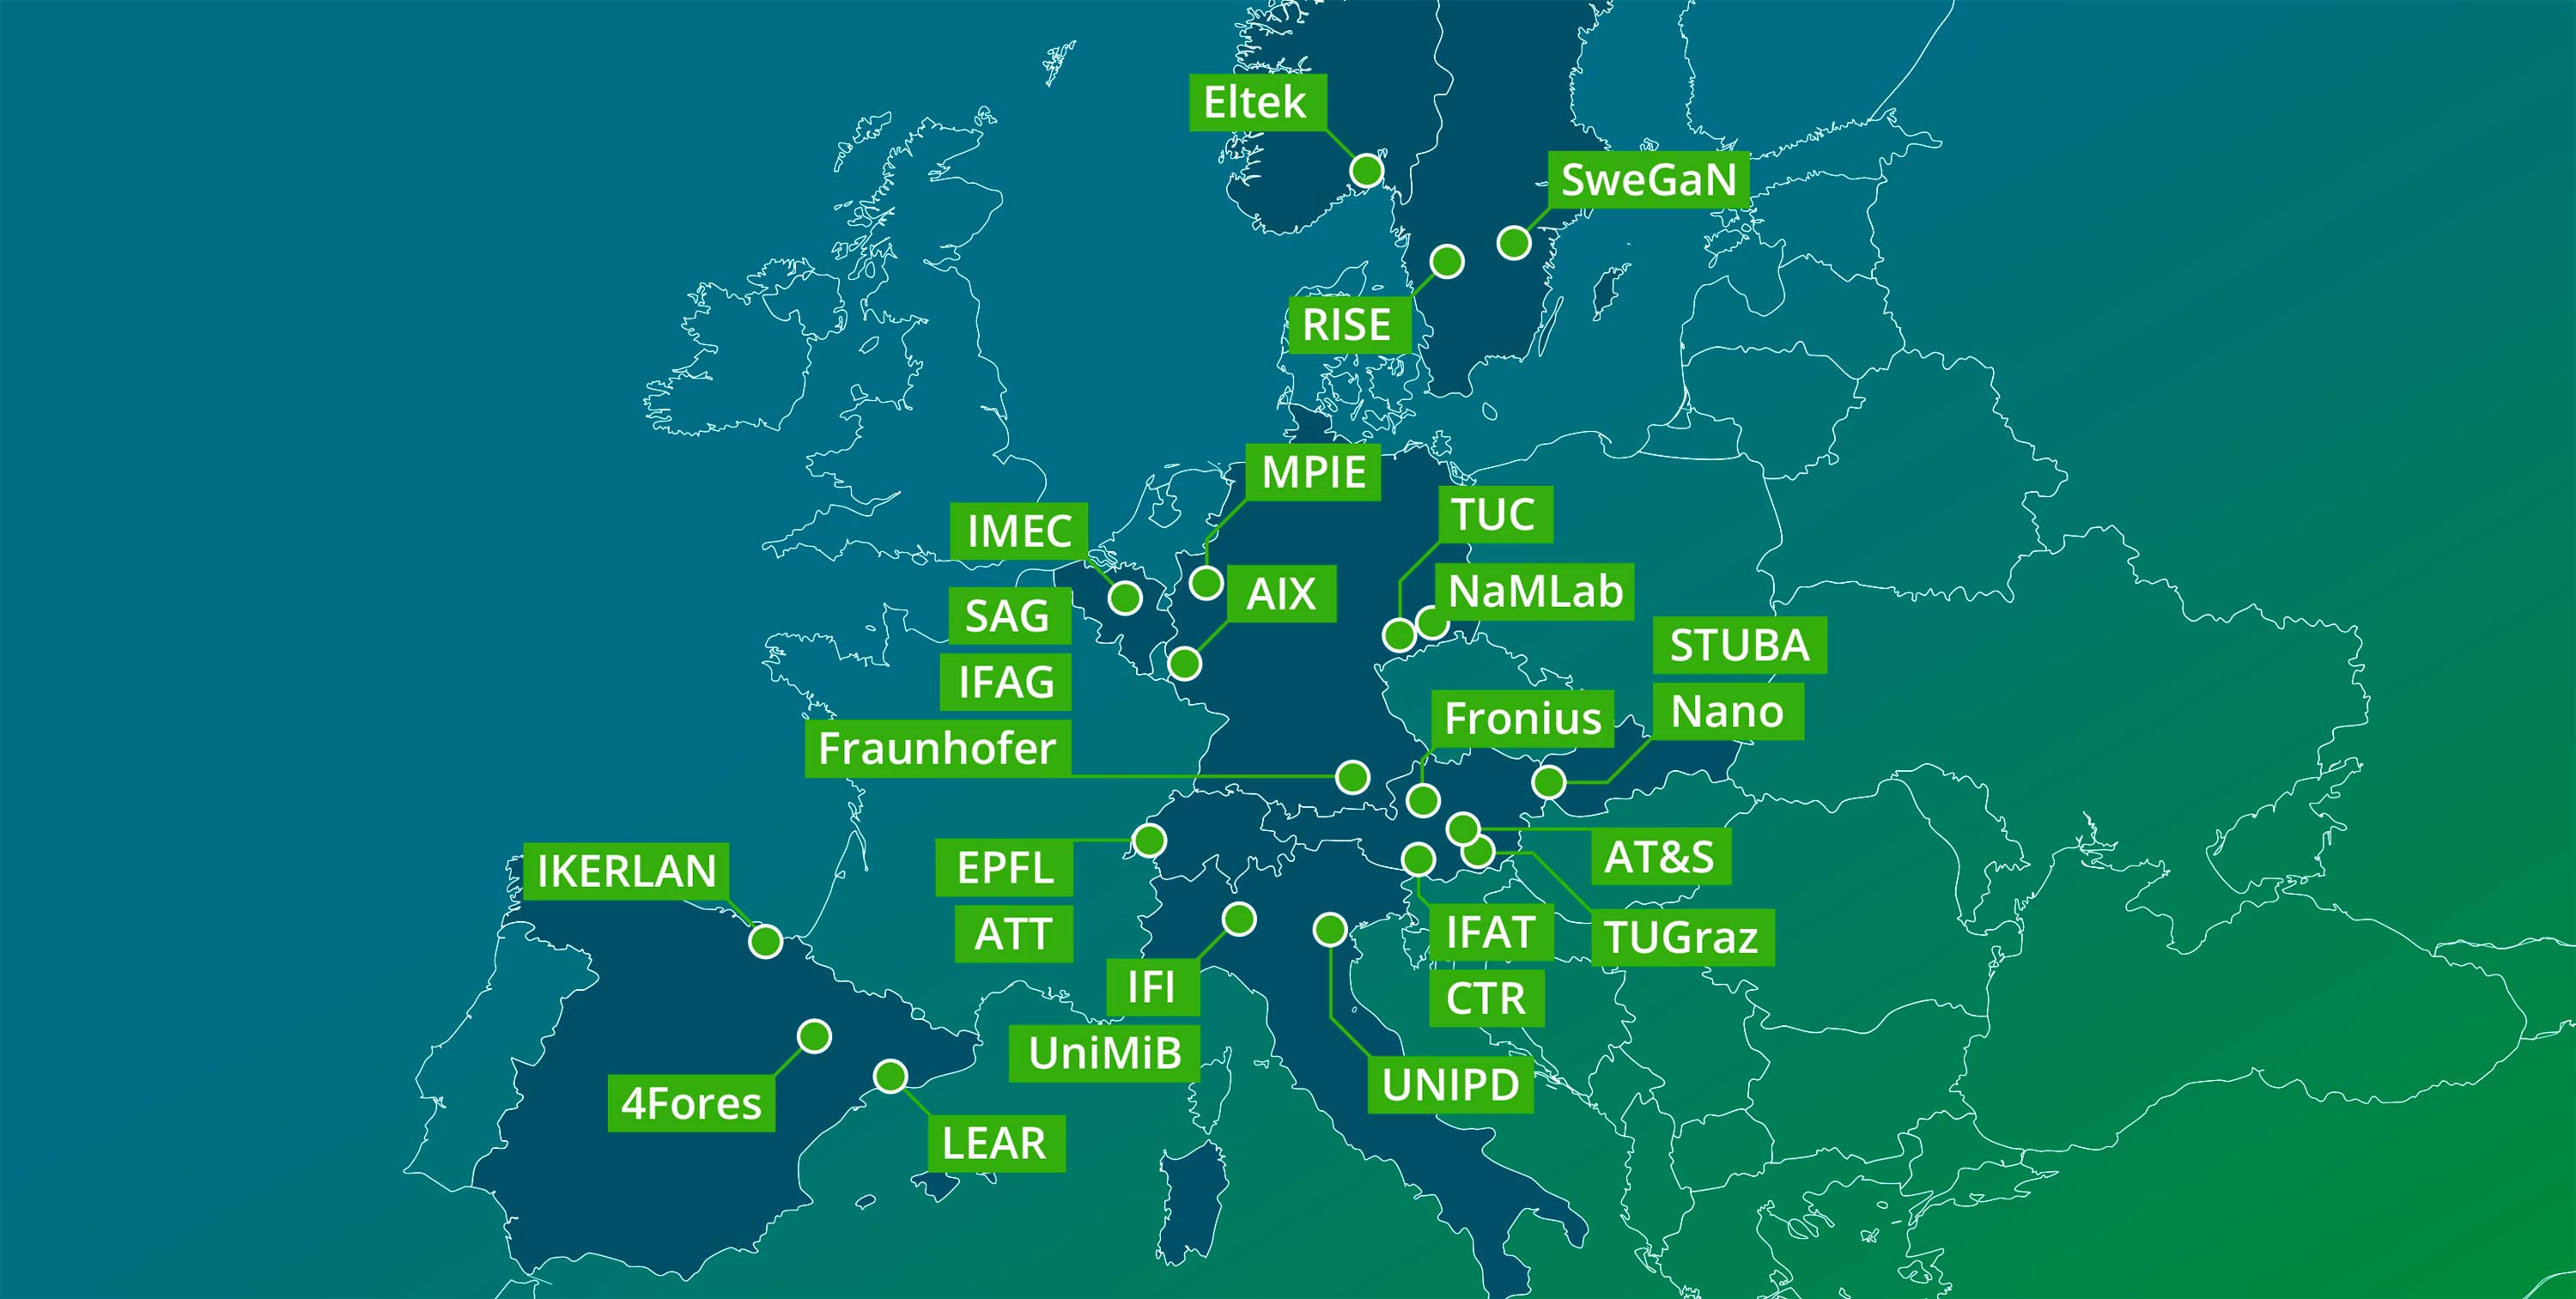 Map of Consortium partners in Europe